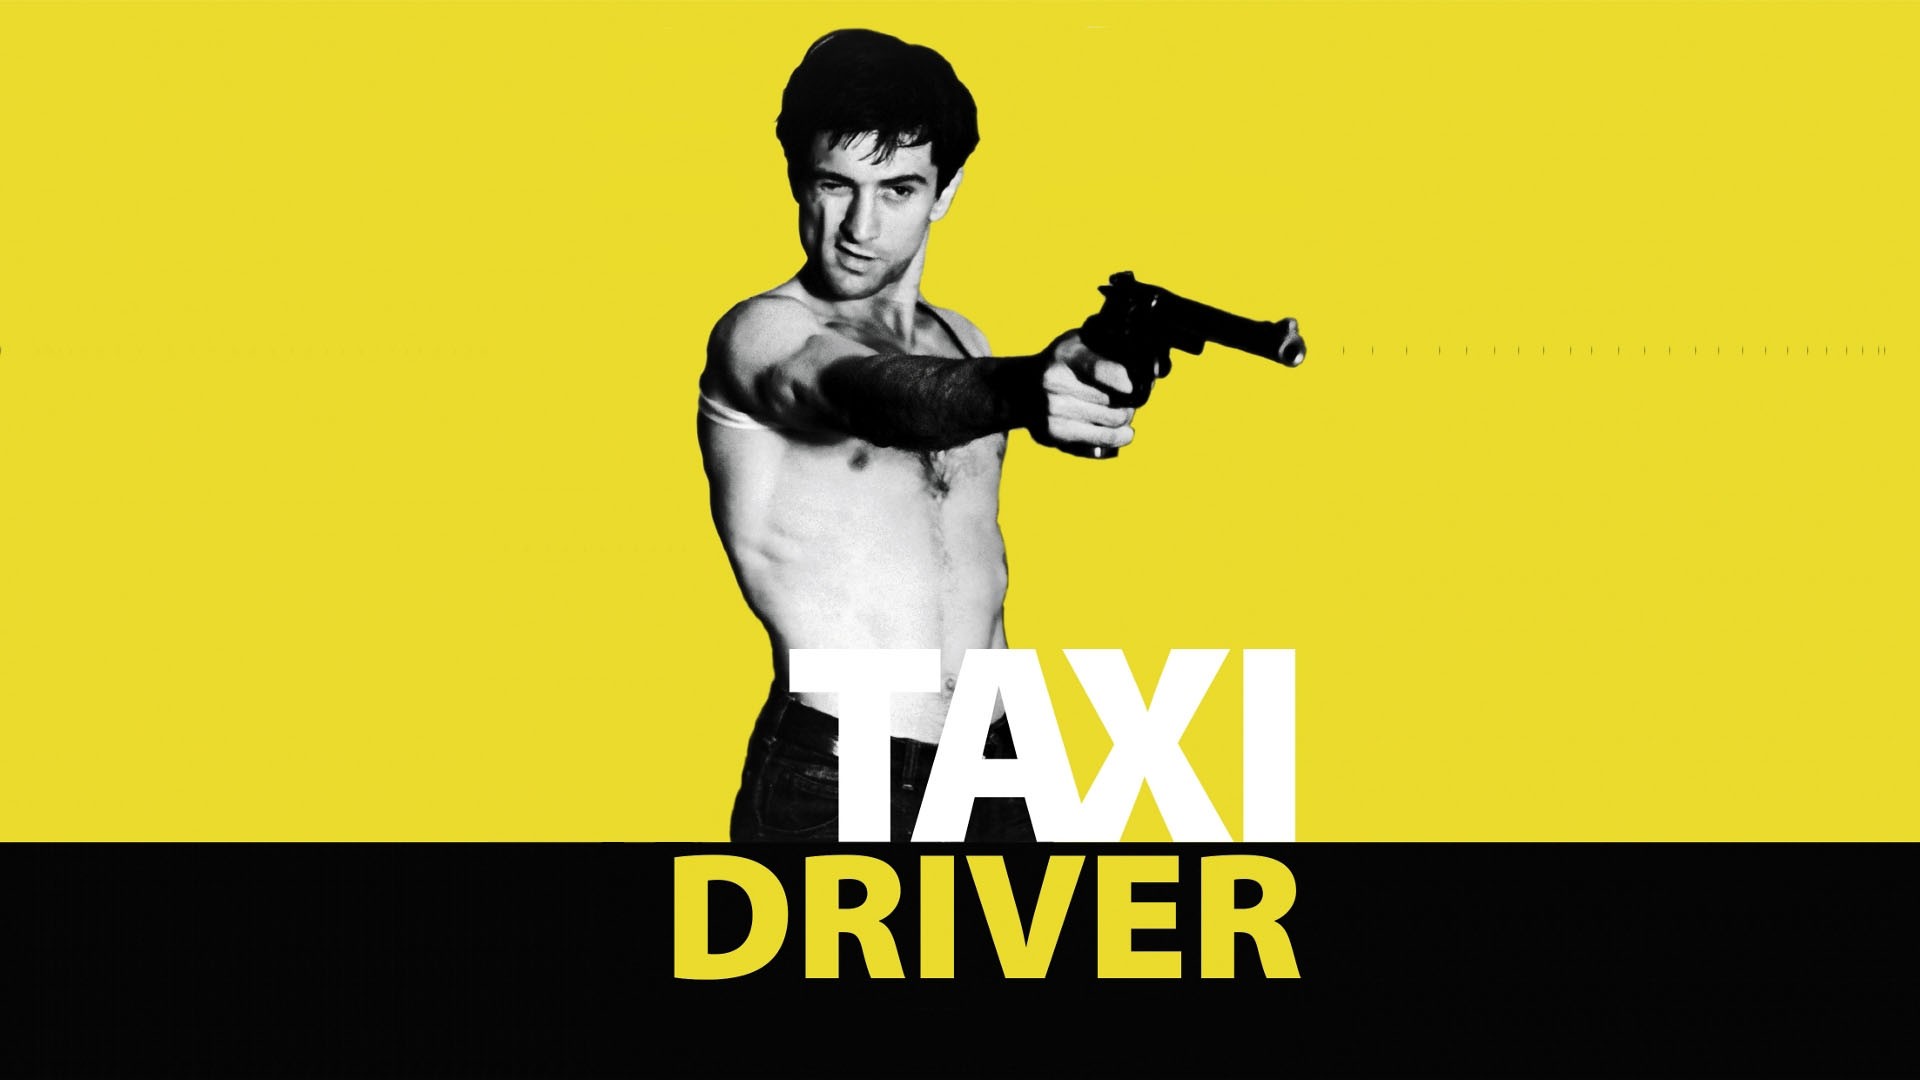 General 1920x1080 Robert de Niro Taxi Driver movies gun yellow yellow background weapon simple background